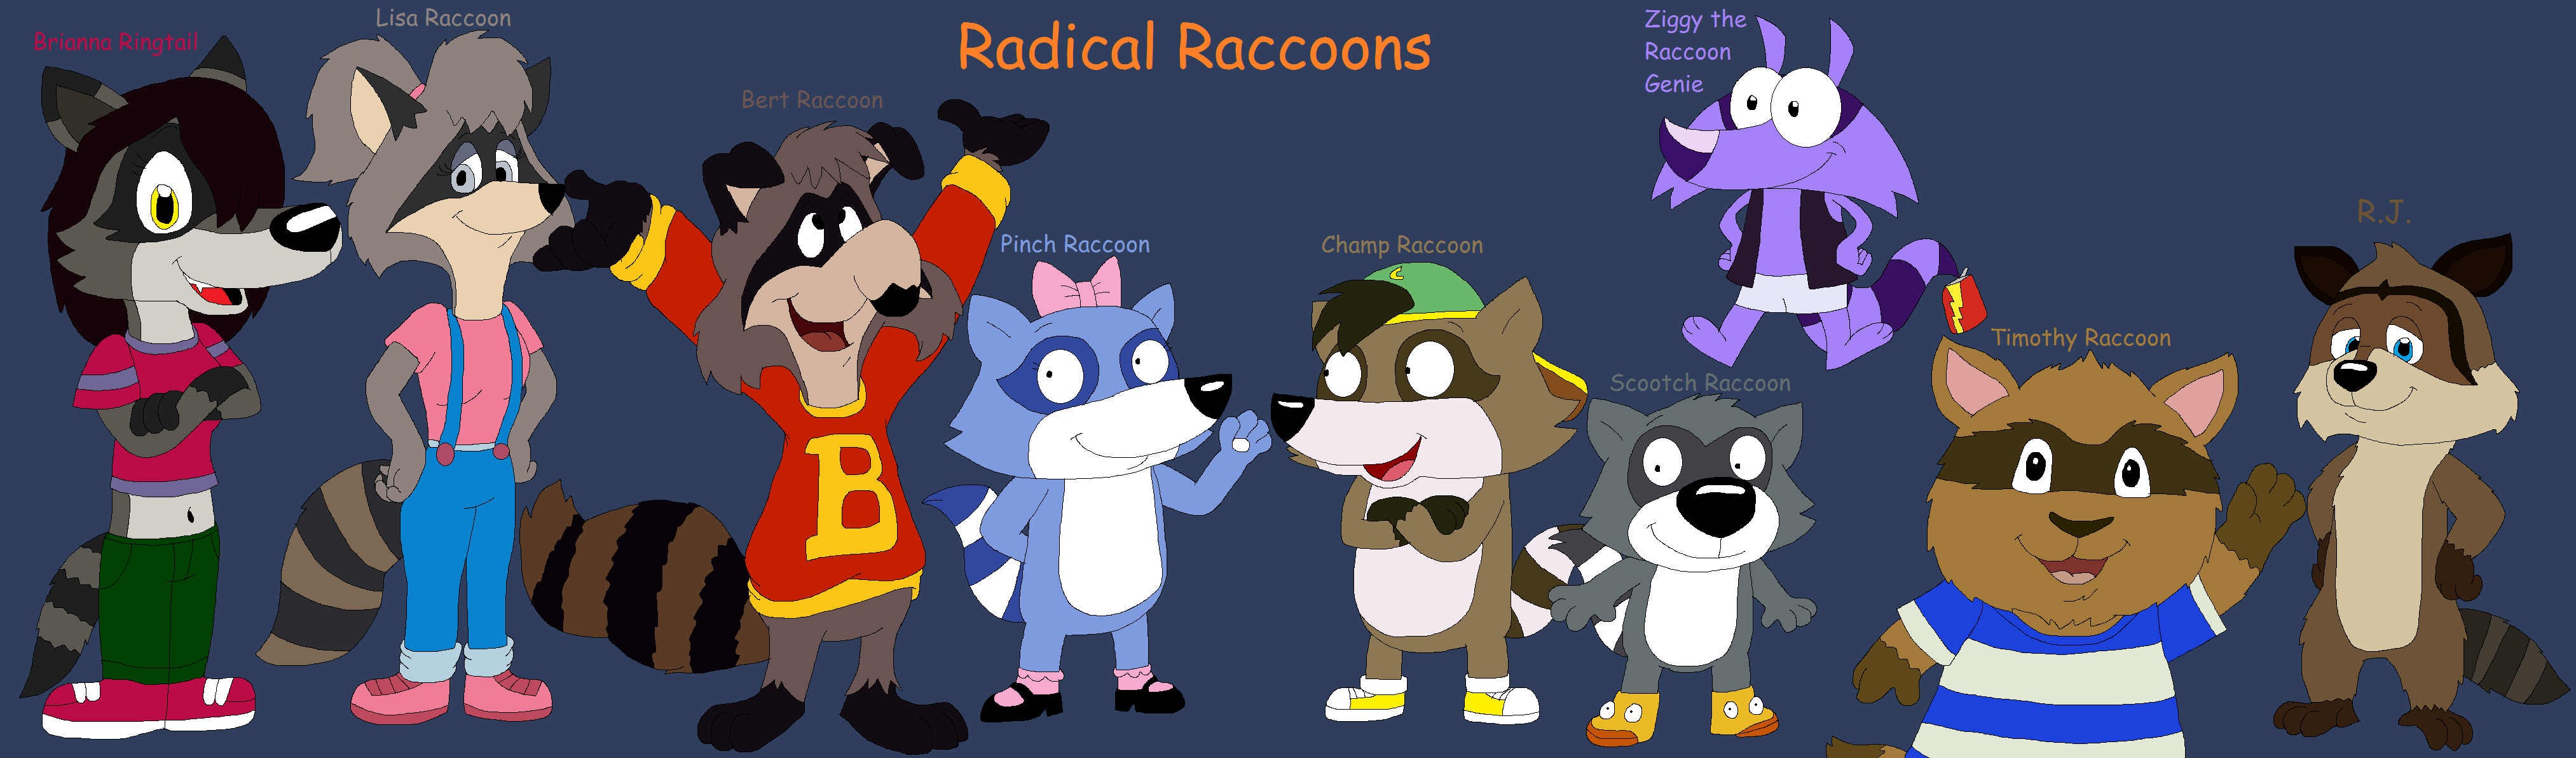 My Favorite Cartoon Raccoons by JustinandDennis on DeviantArt